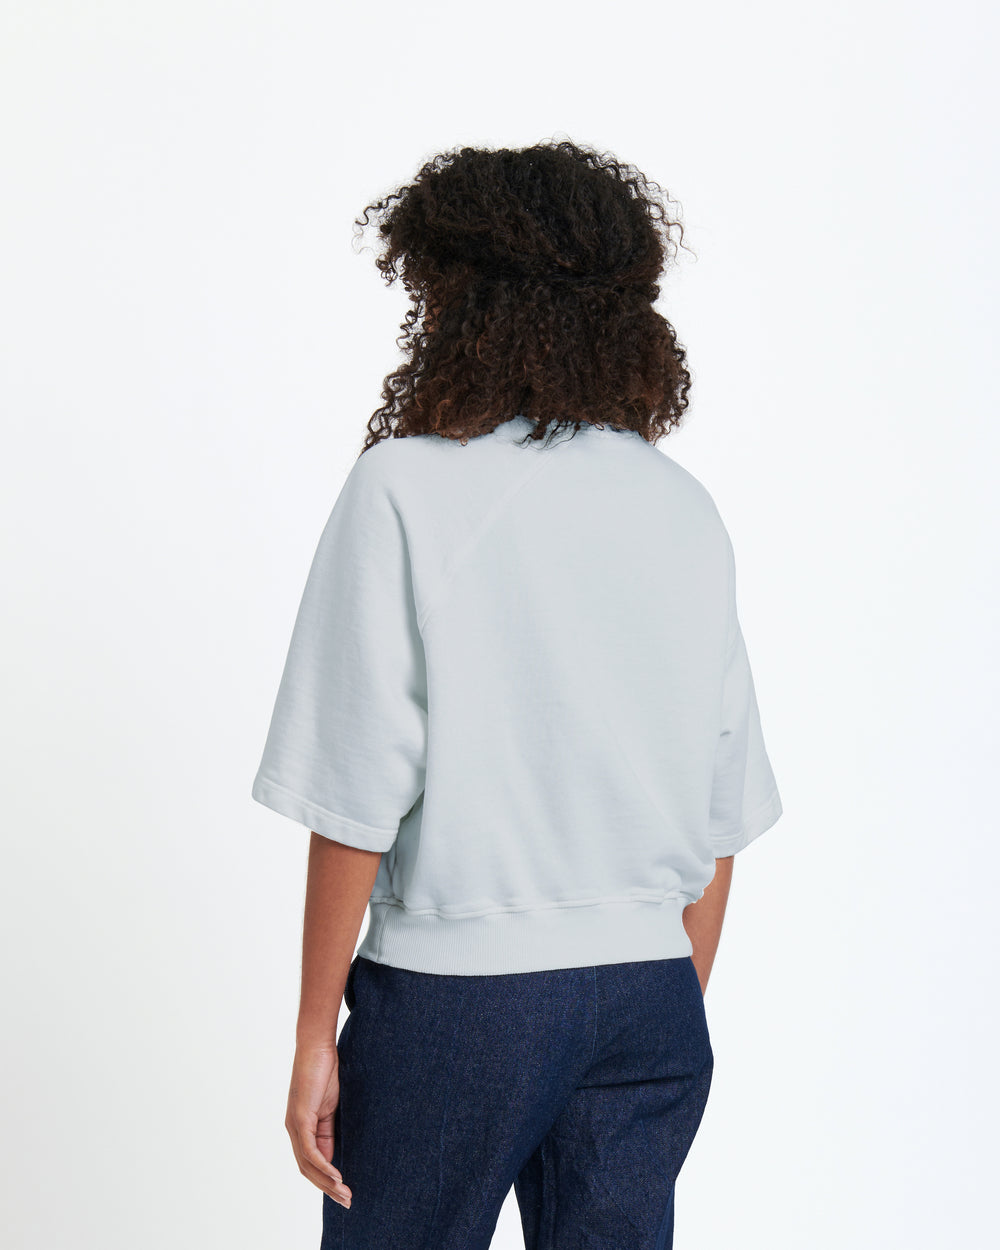 New Optimist womenswear Maltese Ray | Short sleeve crew Crewneck